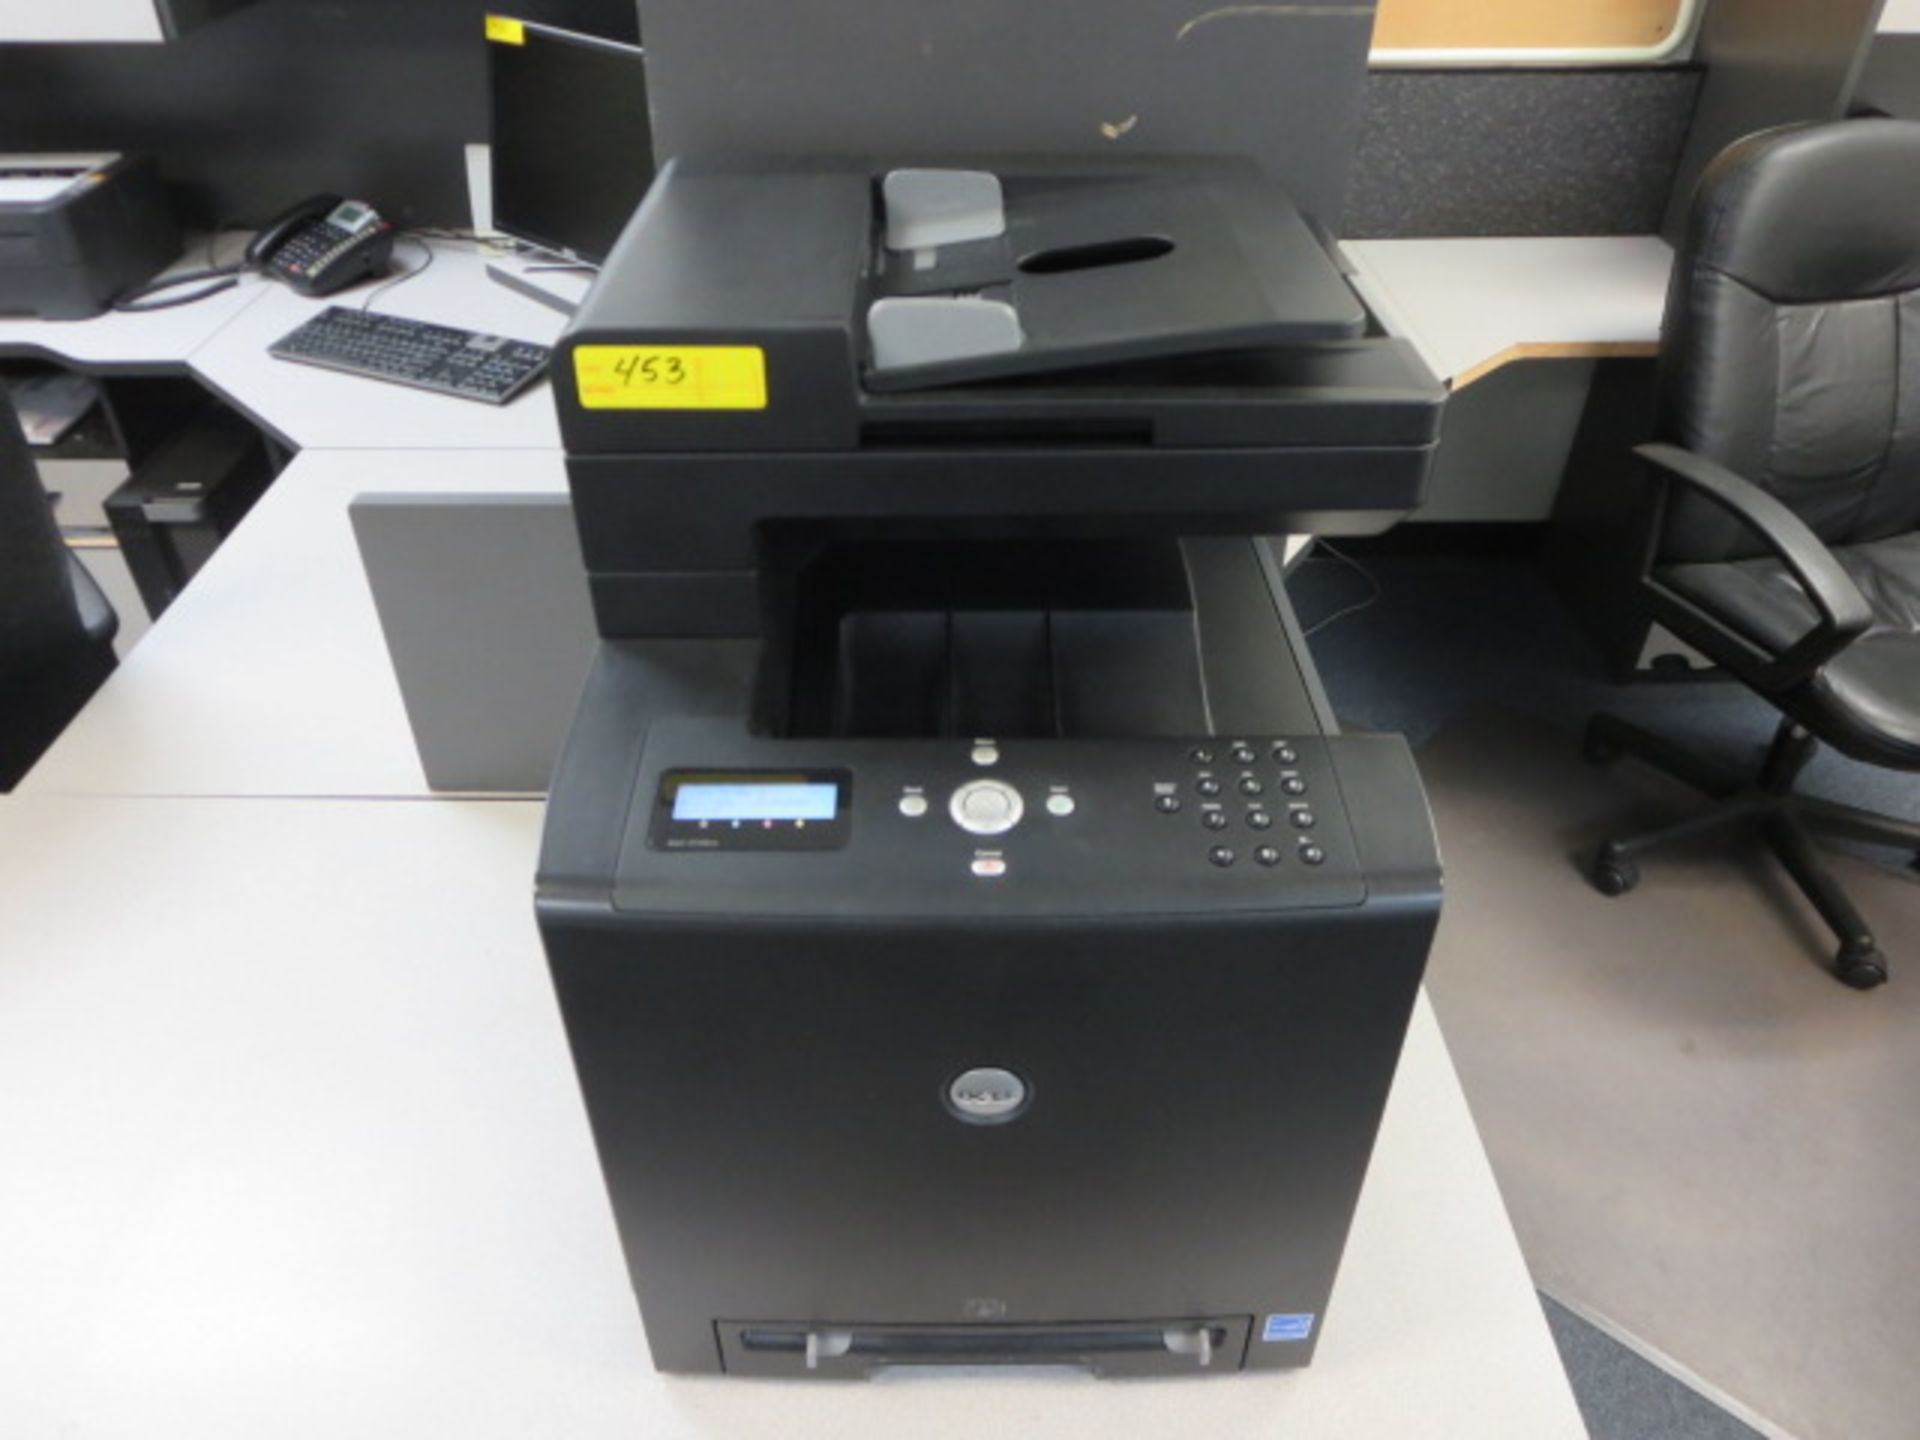 Dell All-In-One Printer, model 2135cn